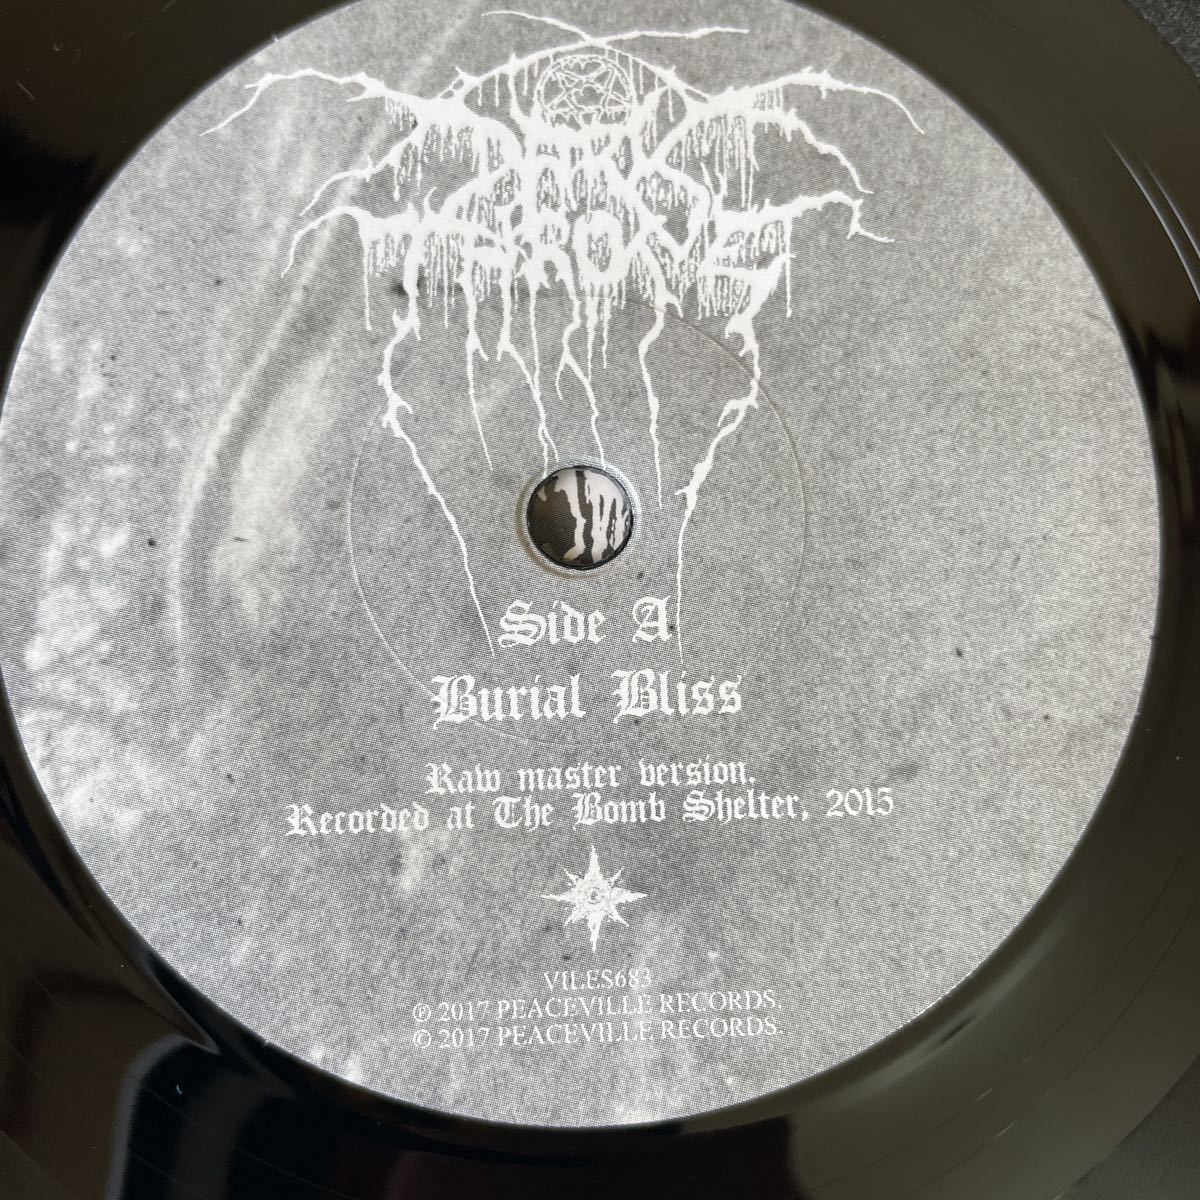 DARKTHRONE - burial bliss / visual aggression 7”EP ブラックメタル black metal_画像3